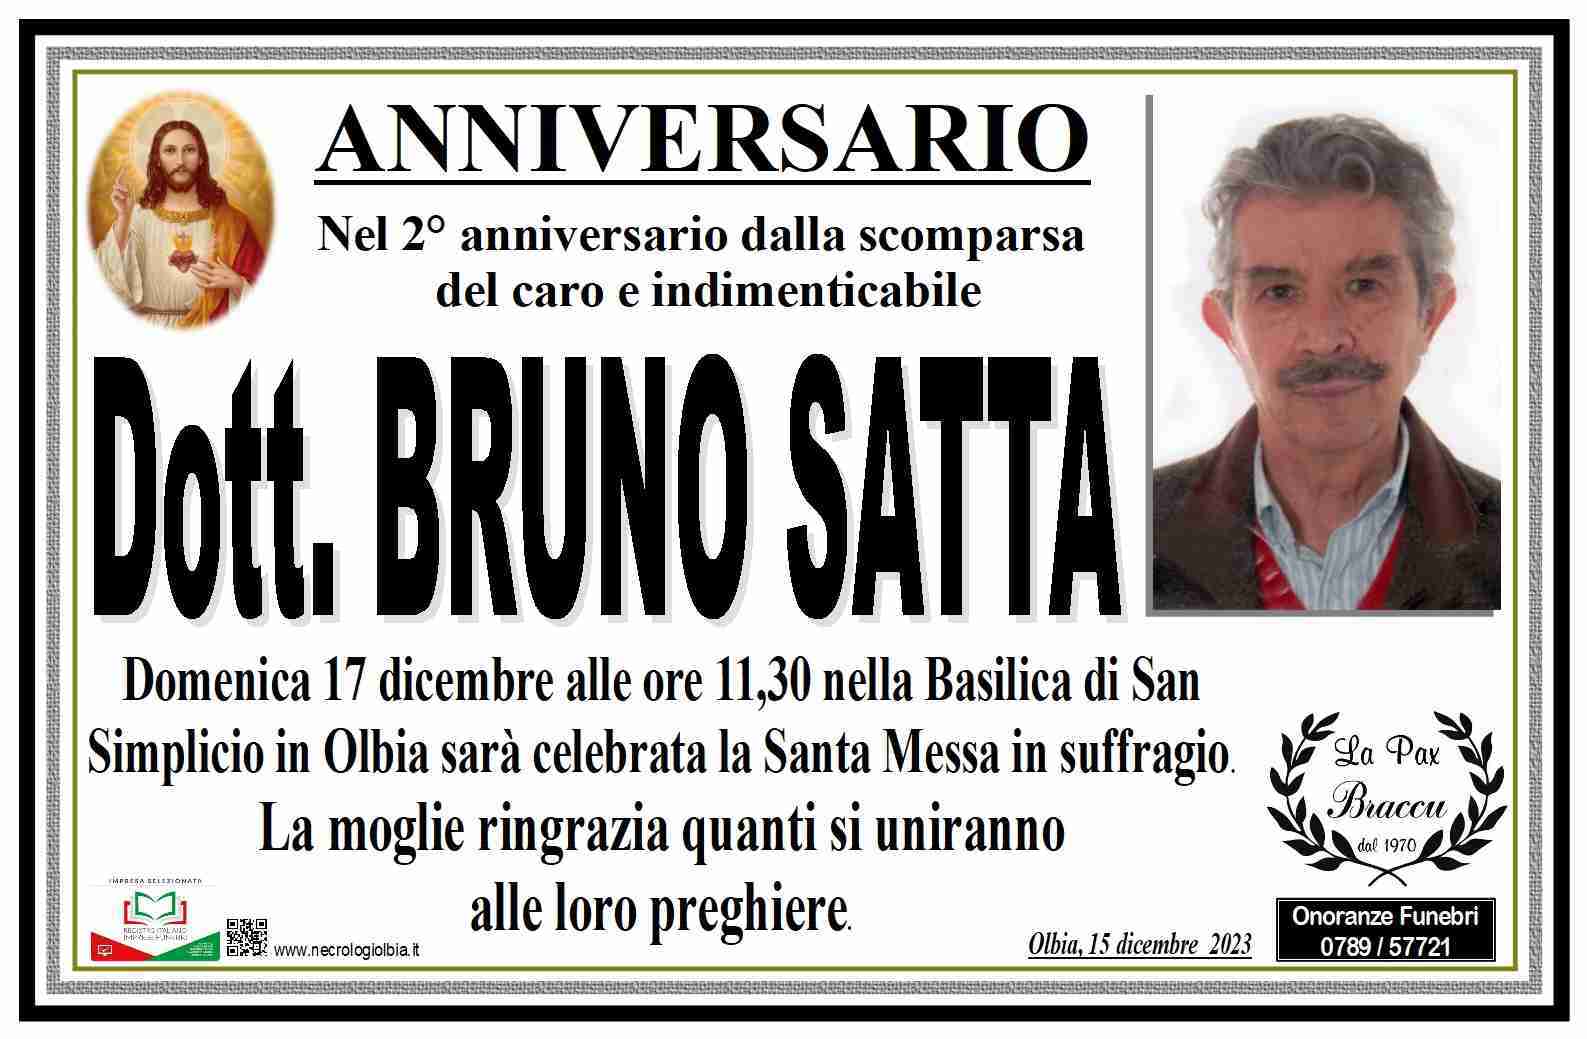 Bruno Satta